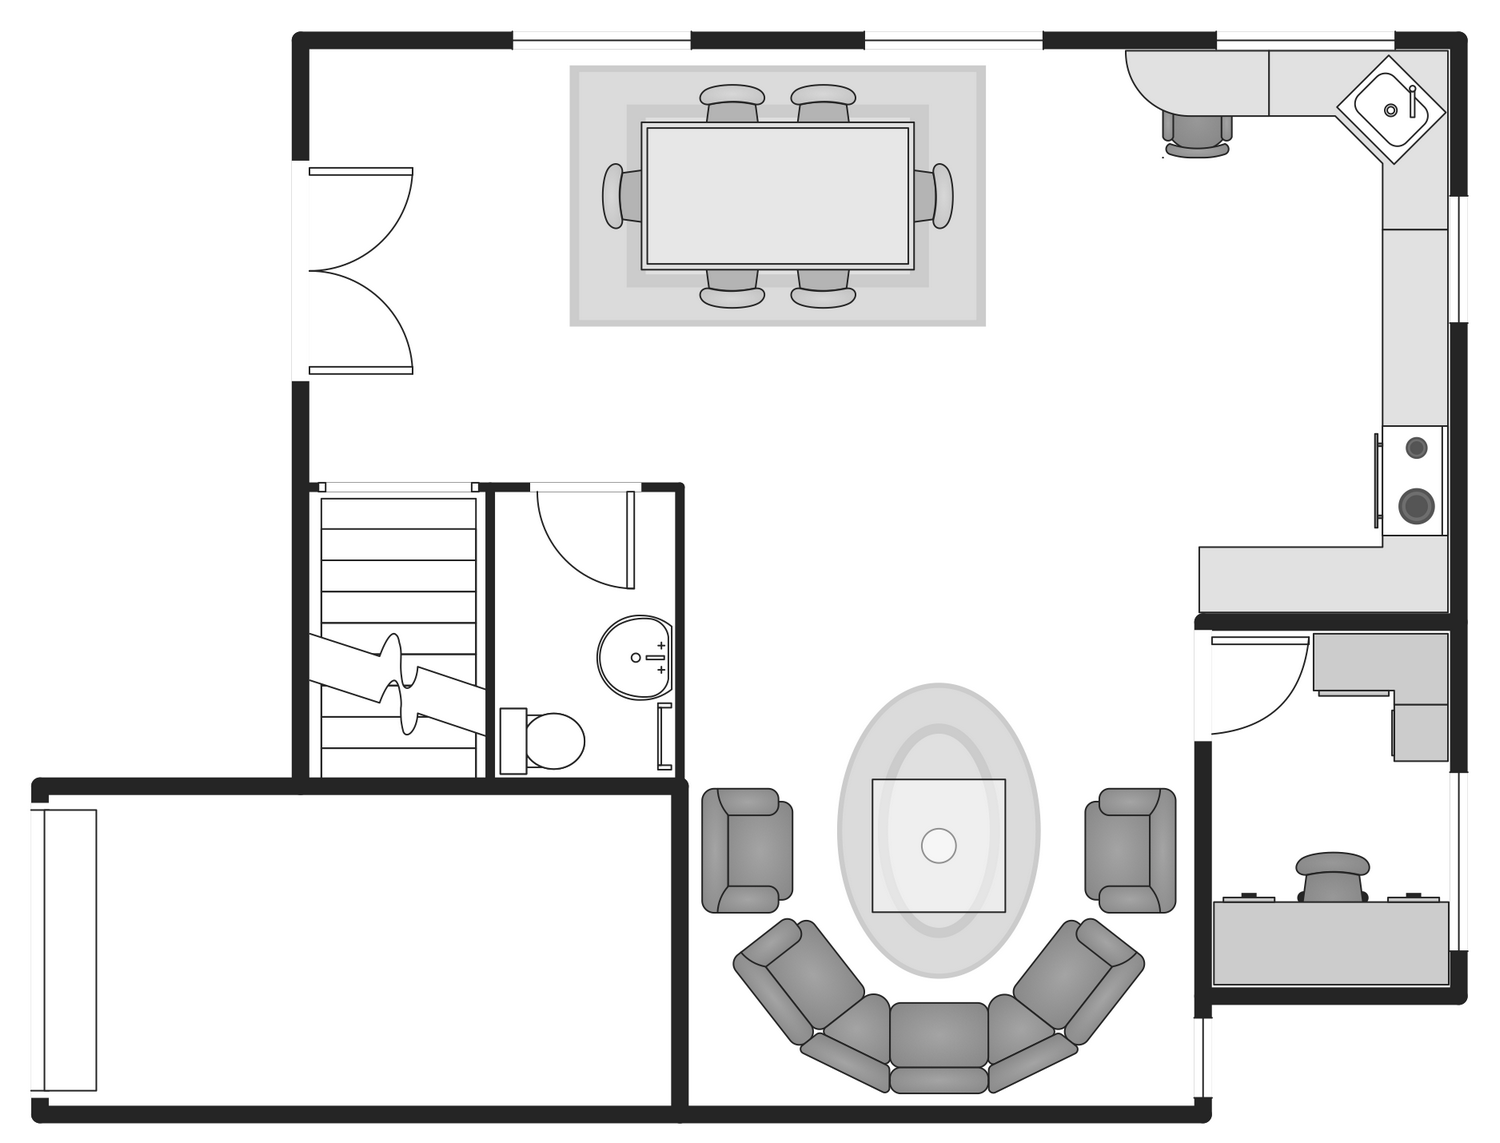 basic floordesign templates